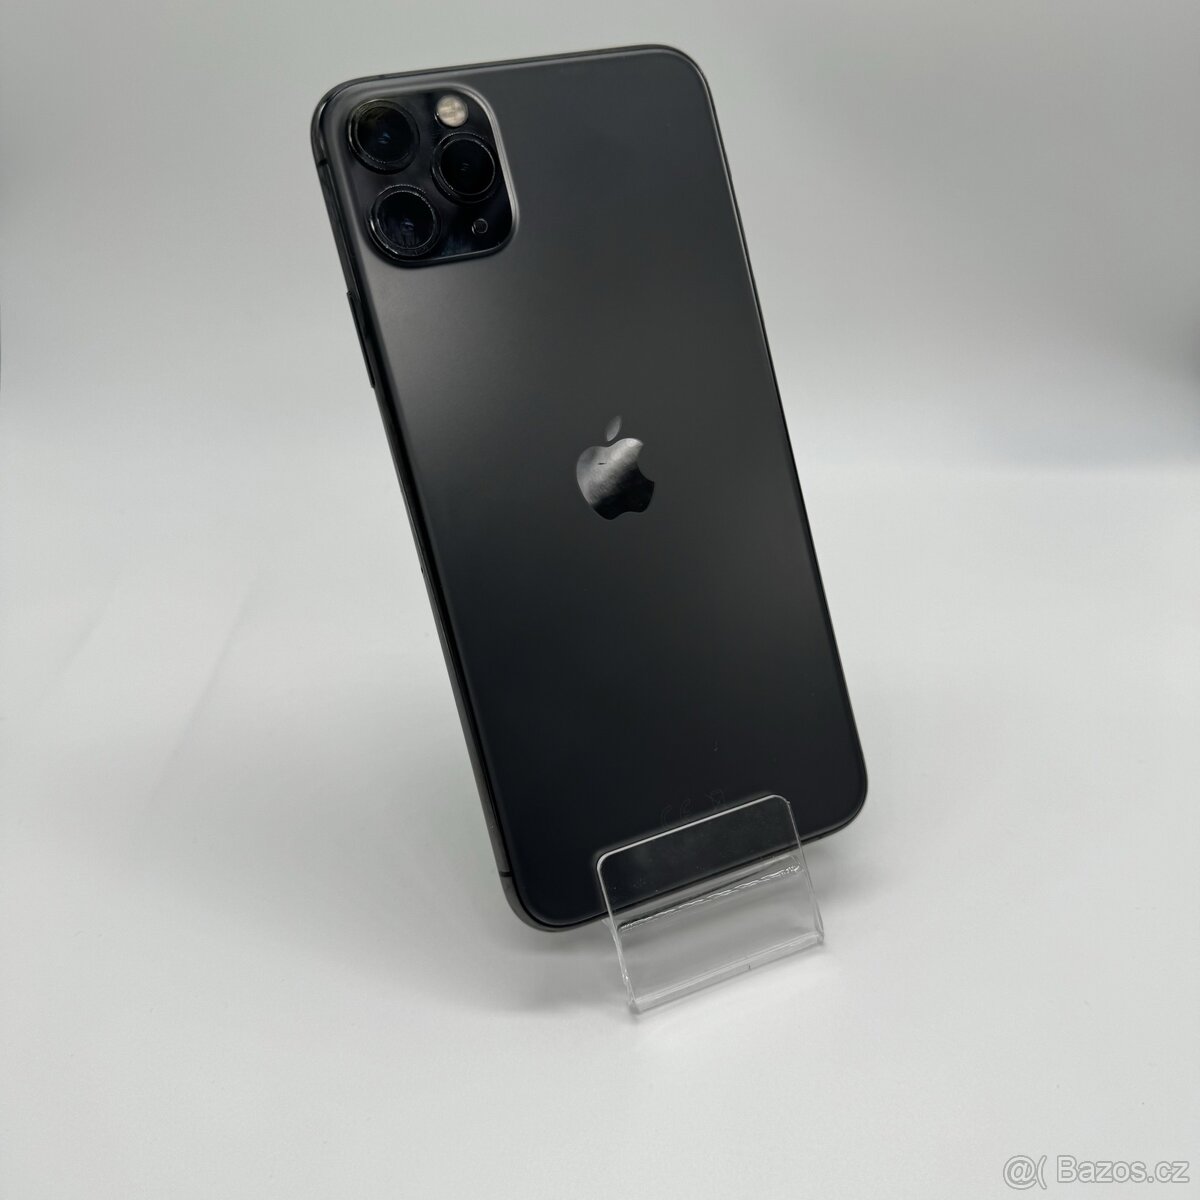 iPhone 11 Pro Max 64GB, šedý (rok záruka)